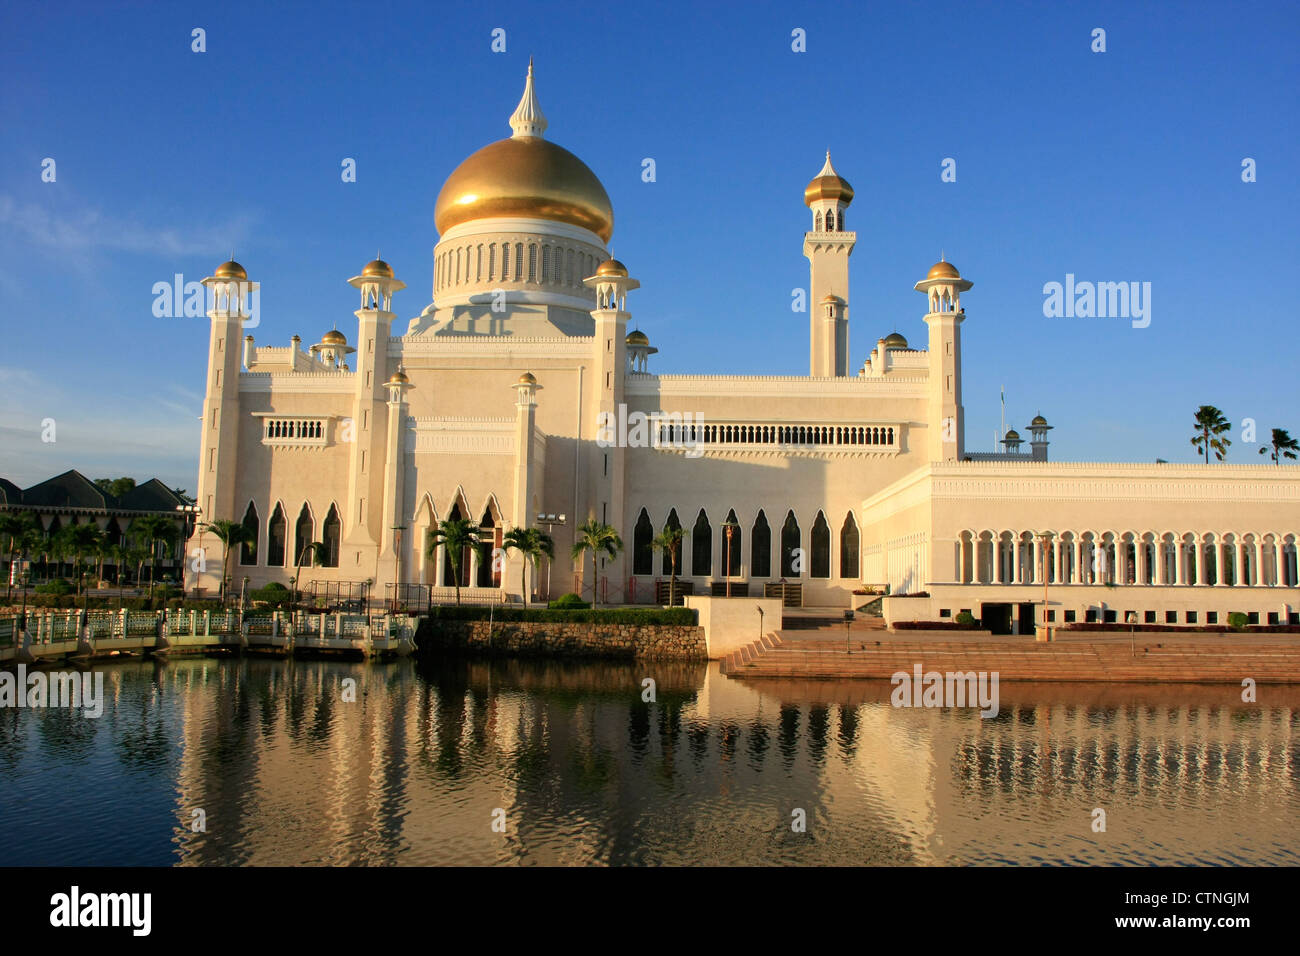 Sultan Omar Ali Mosquée Saifudding, Bandar Seri Begawan, Brunei, en Asie du sud-est Banque D'Images